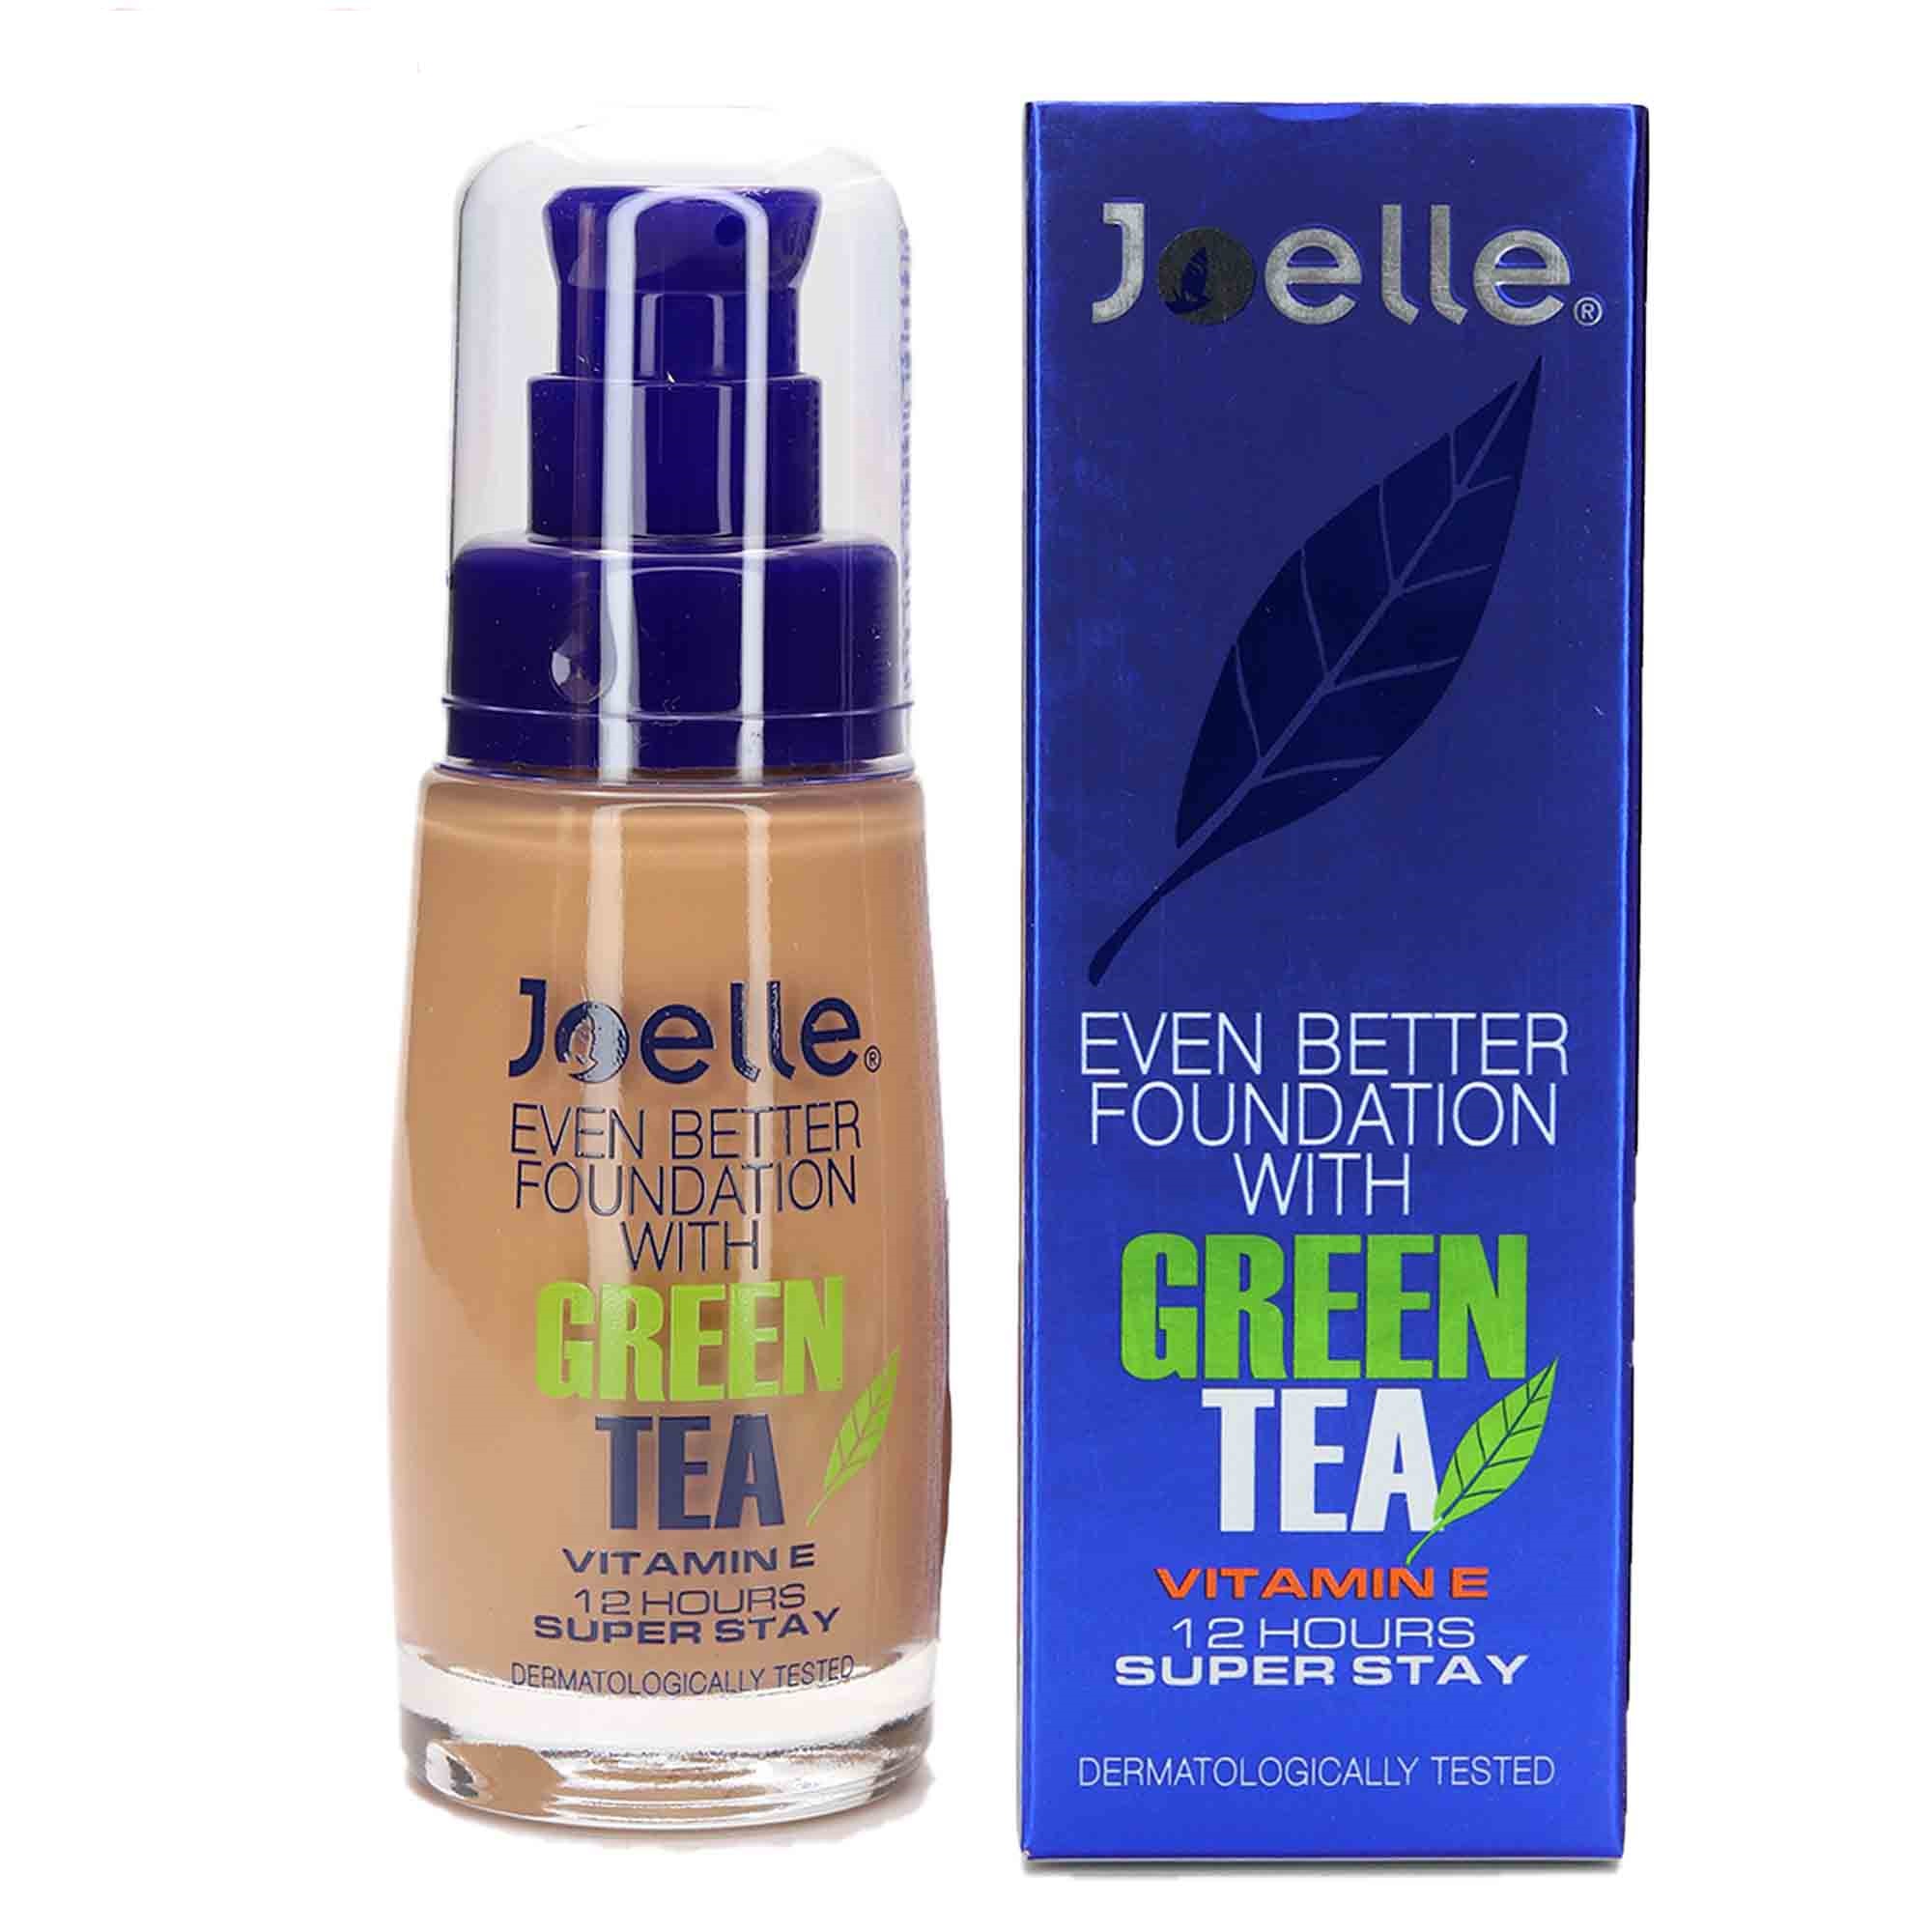 Joel 10 powder cream with green tea extract - Joelle Size: 30ML